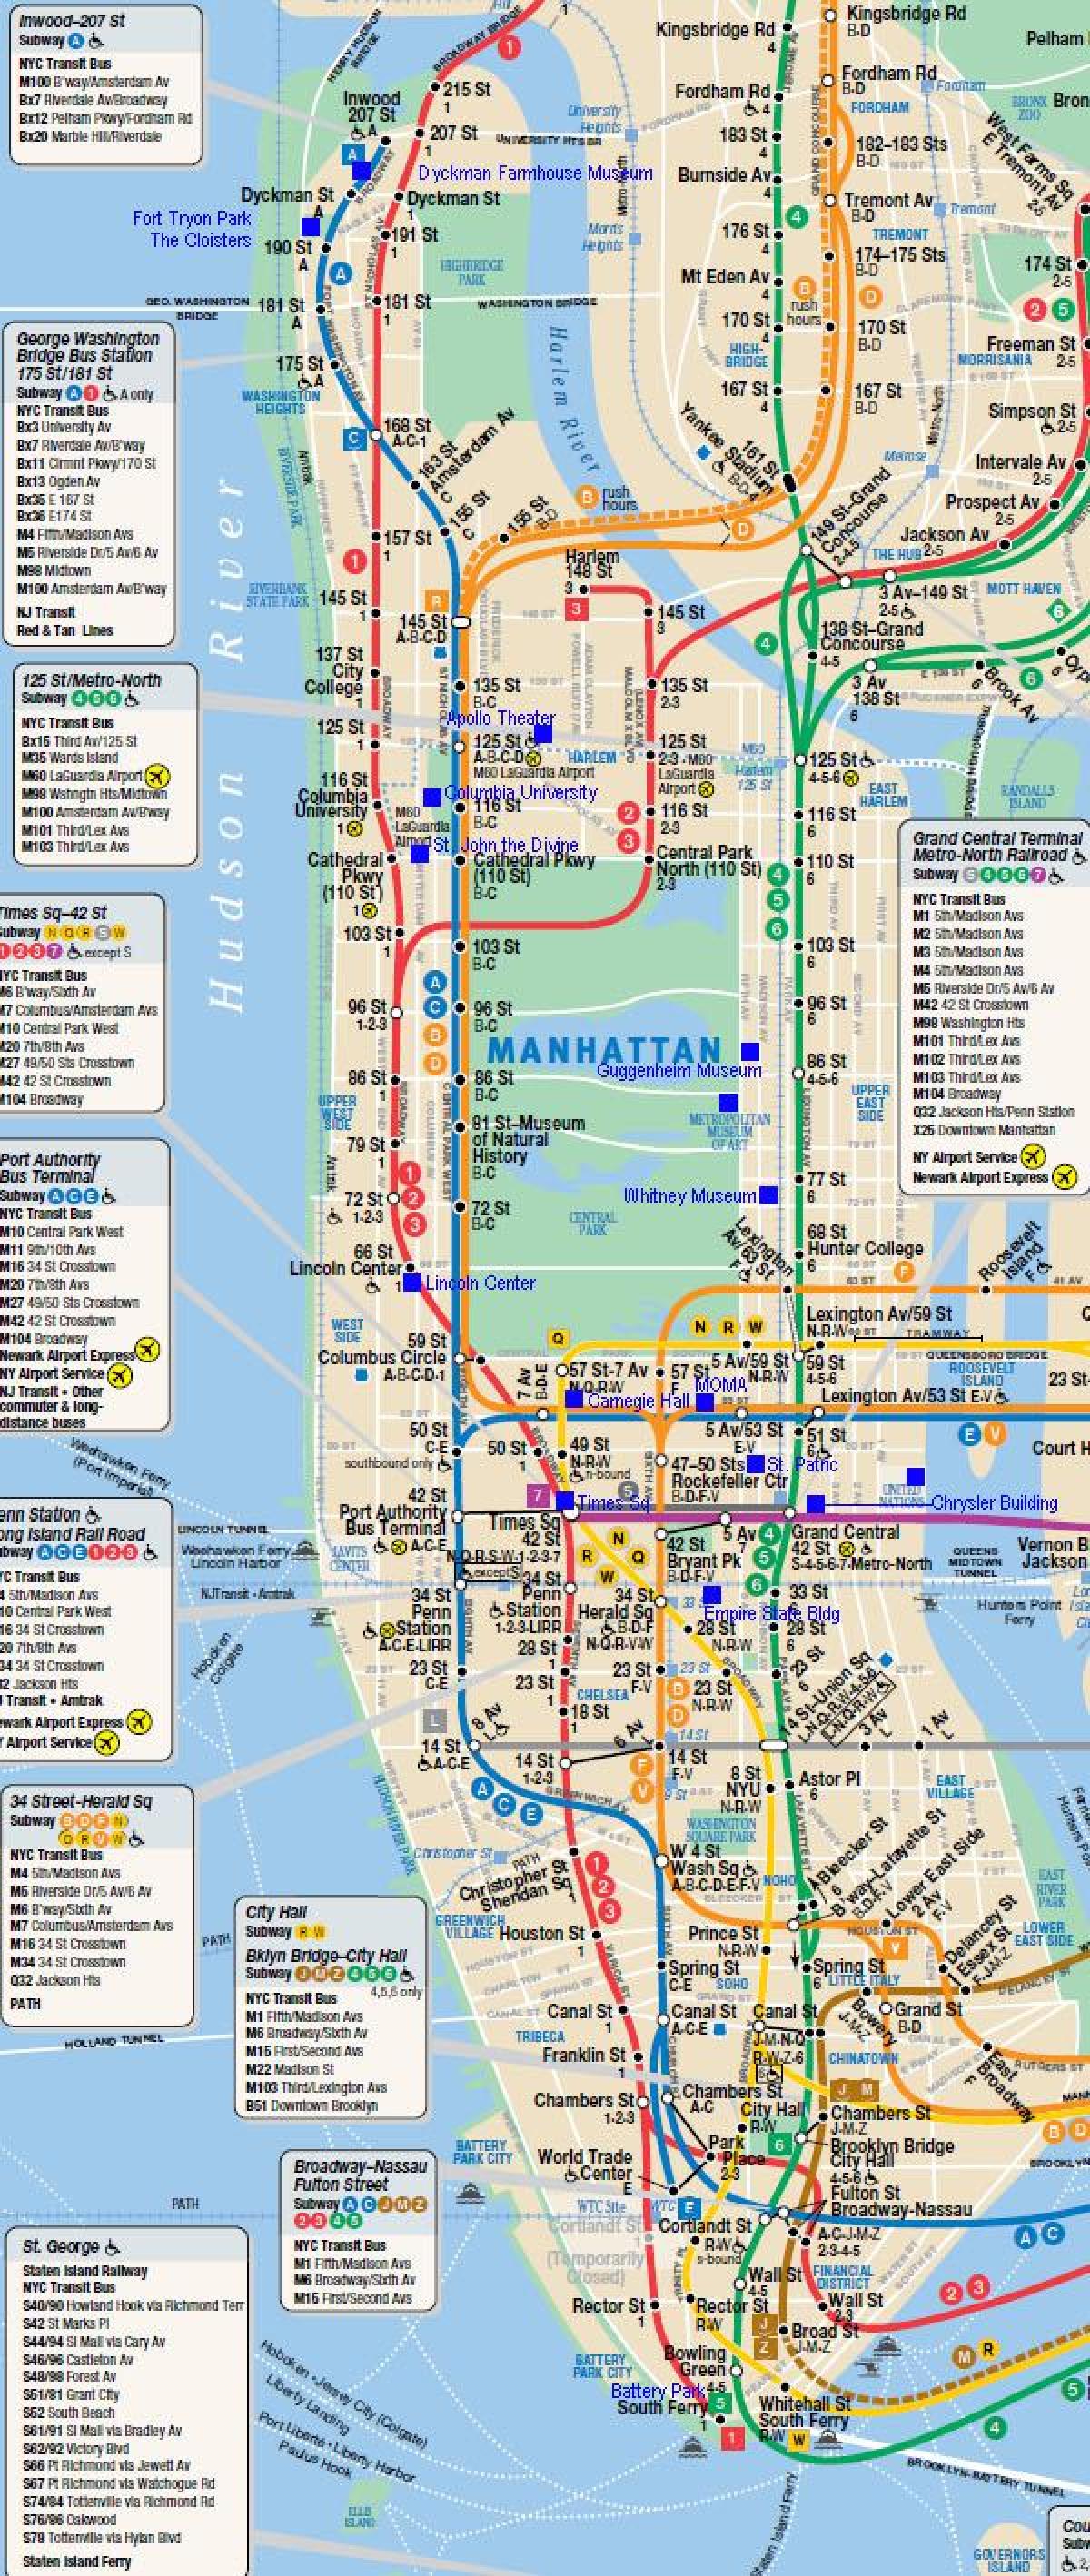 Manhattan peta kereta api